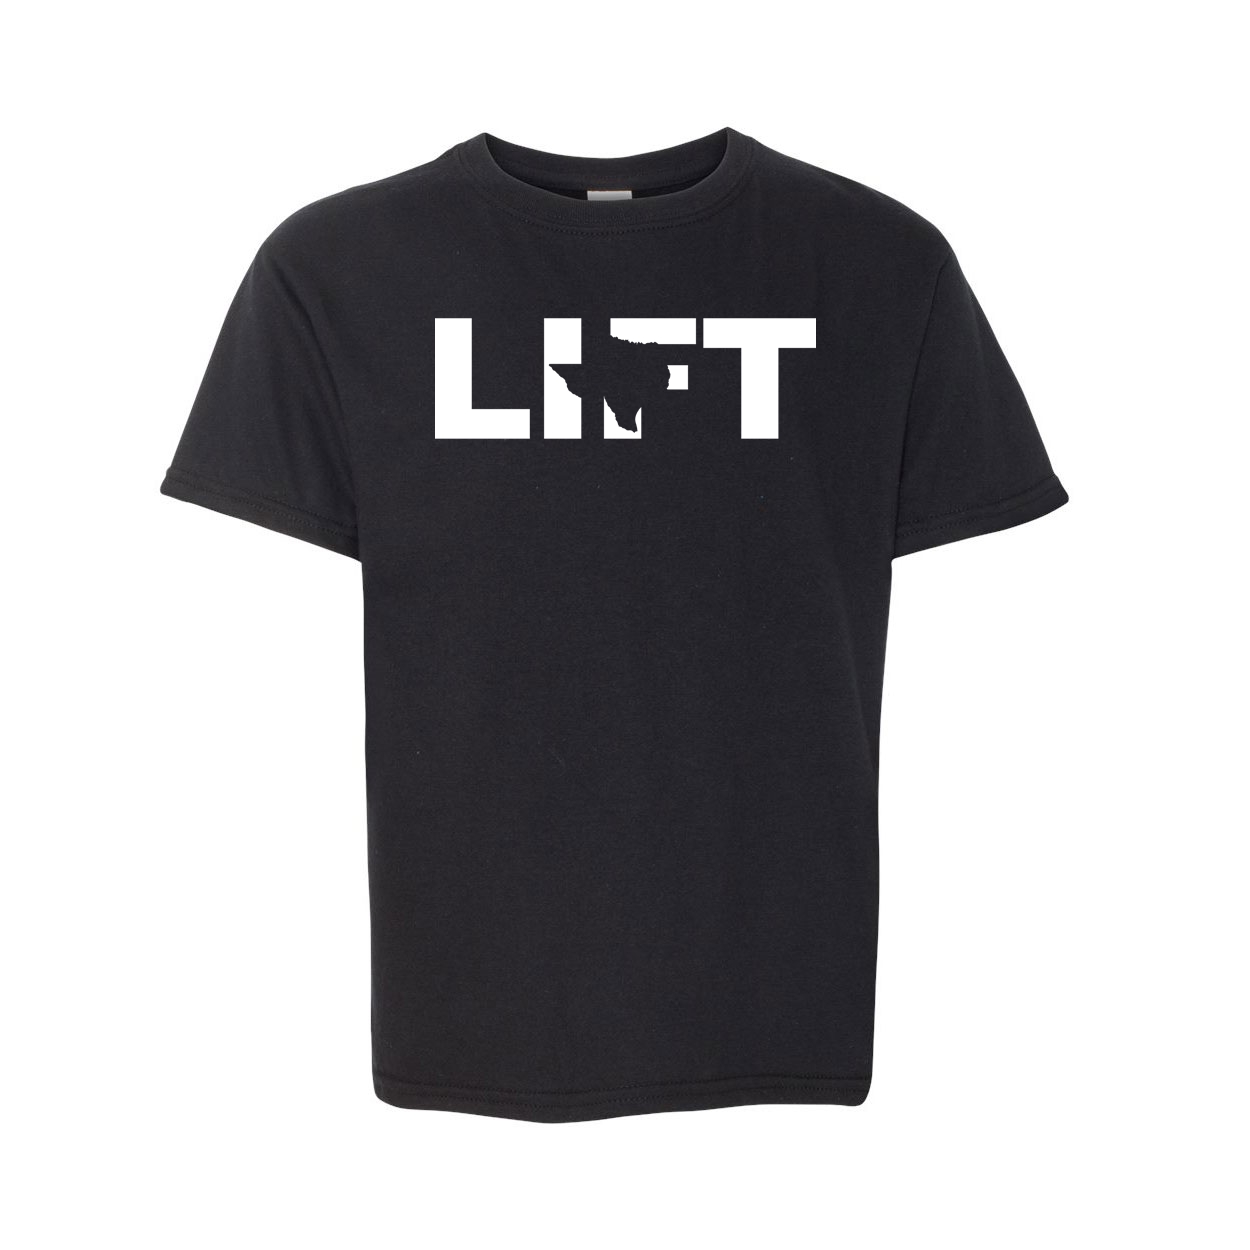 Lift Texas Classic Youth T-Shirt Black (White Logo)